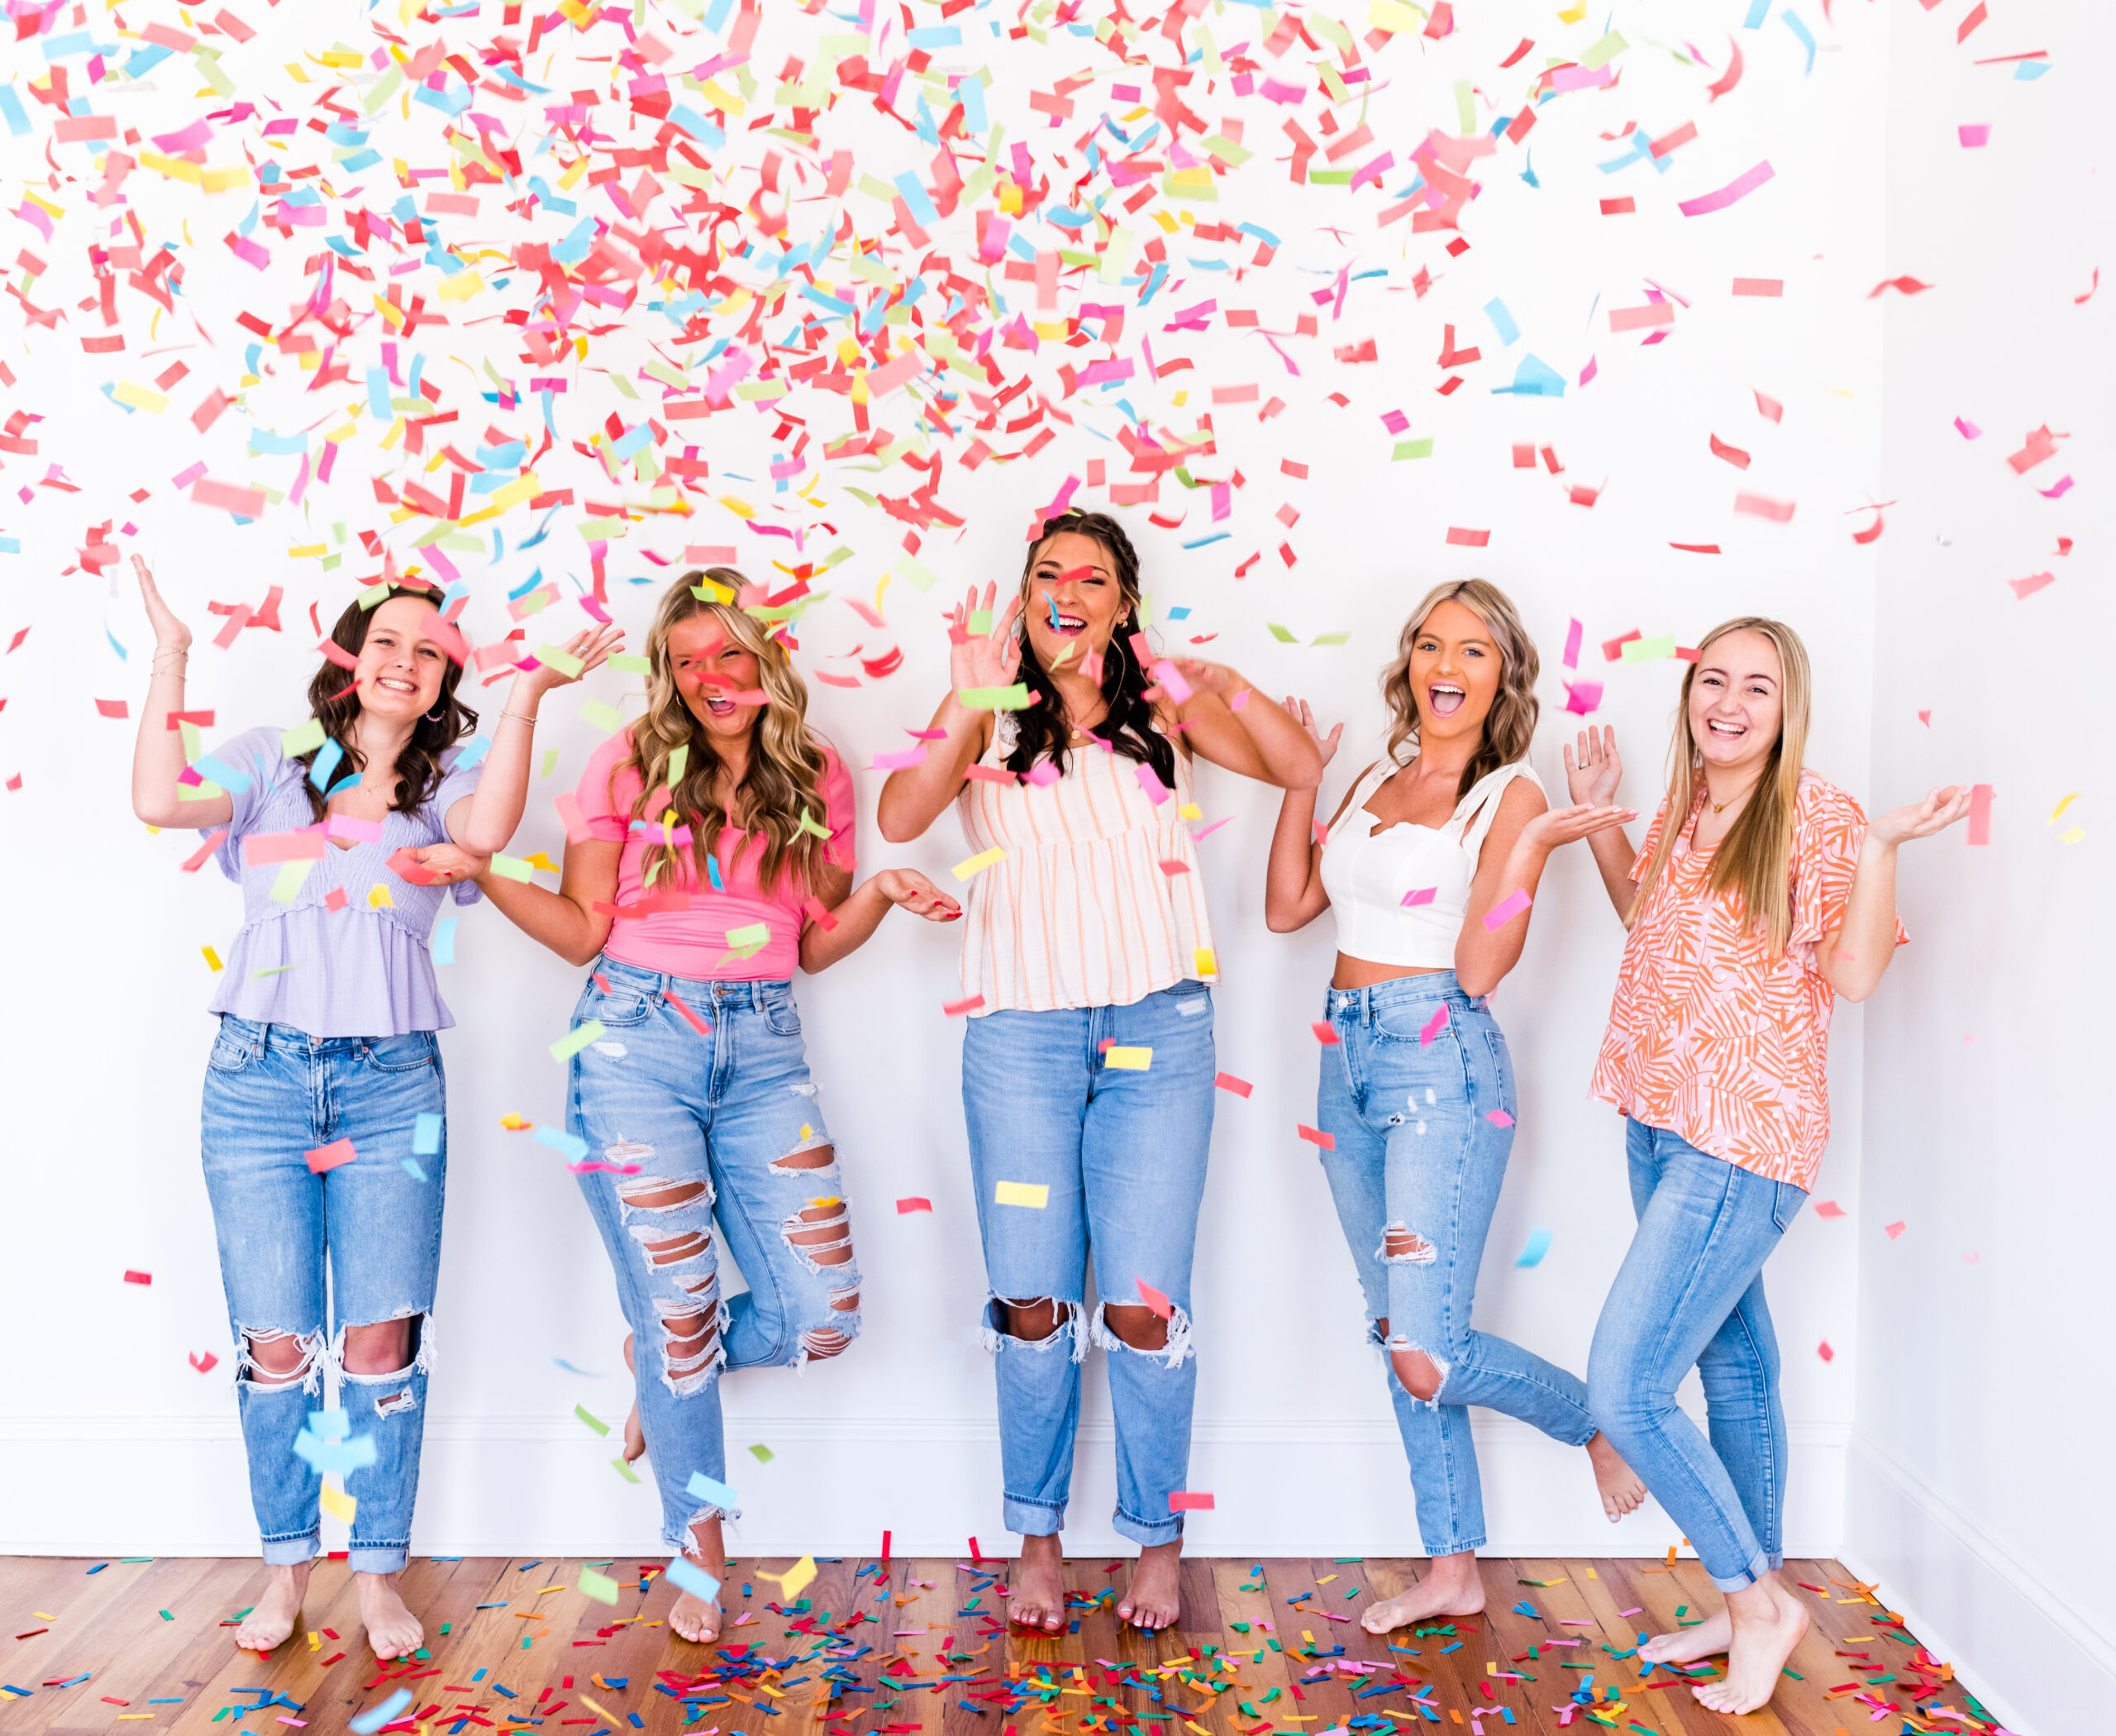 High school senior girls pop confetti cannons in a fun studio photo session.